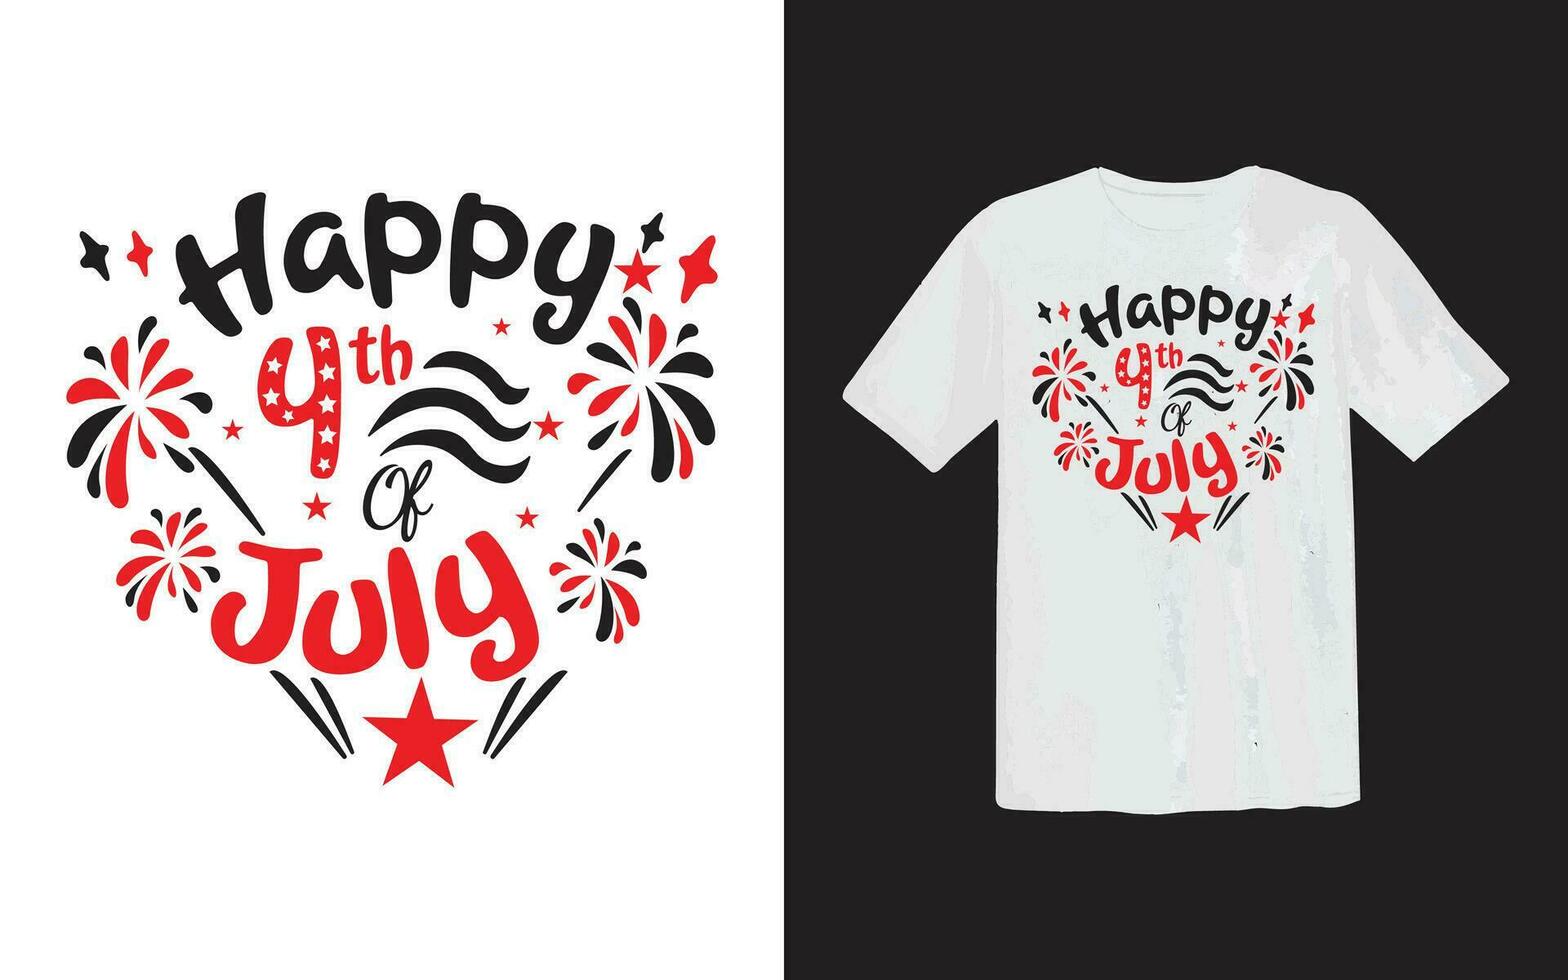 gelukkig 4e juli t overhemd ontwerp vector